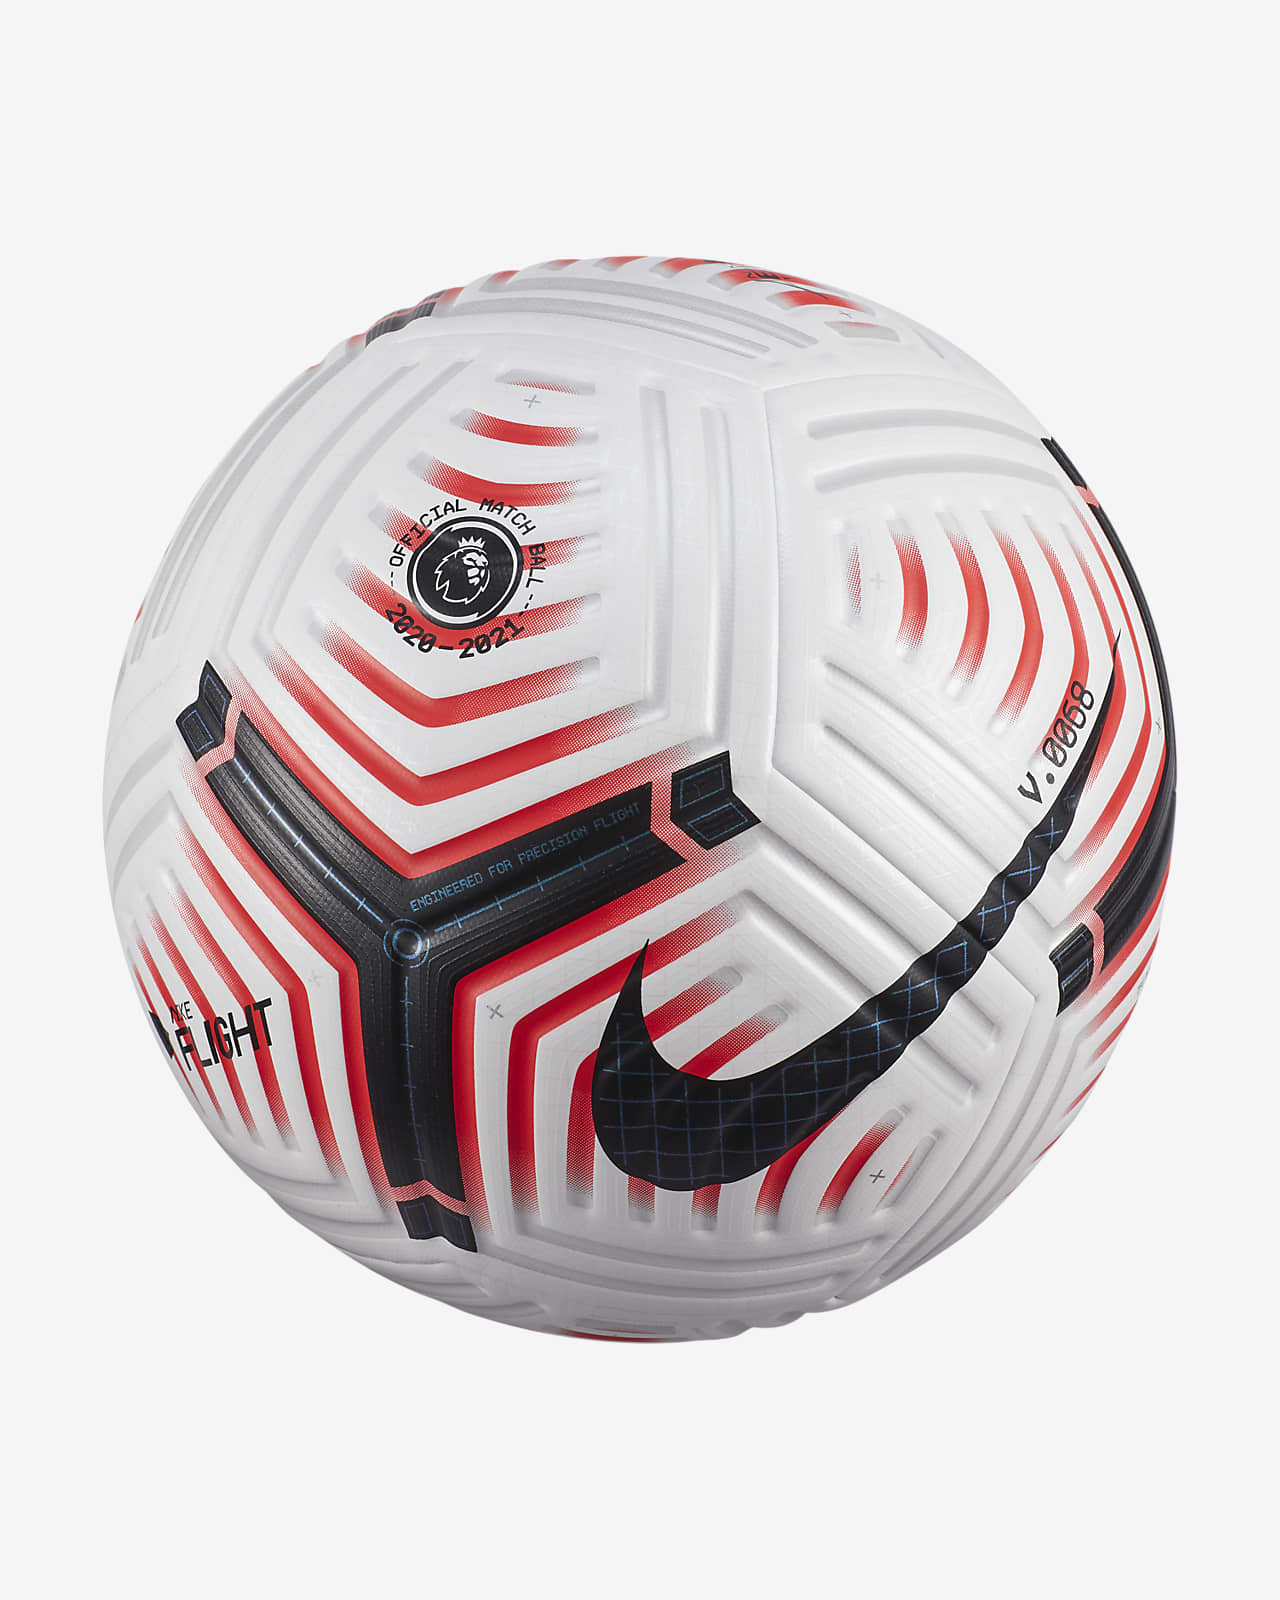 Balón de fútbol Premier League Flight. Nike.com